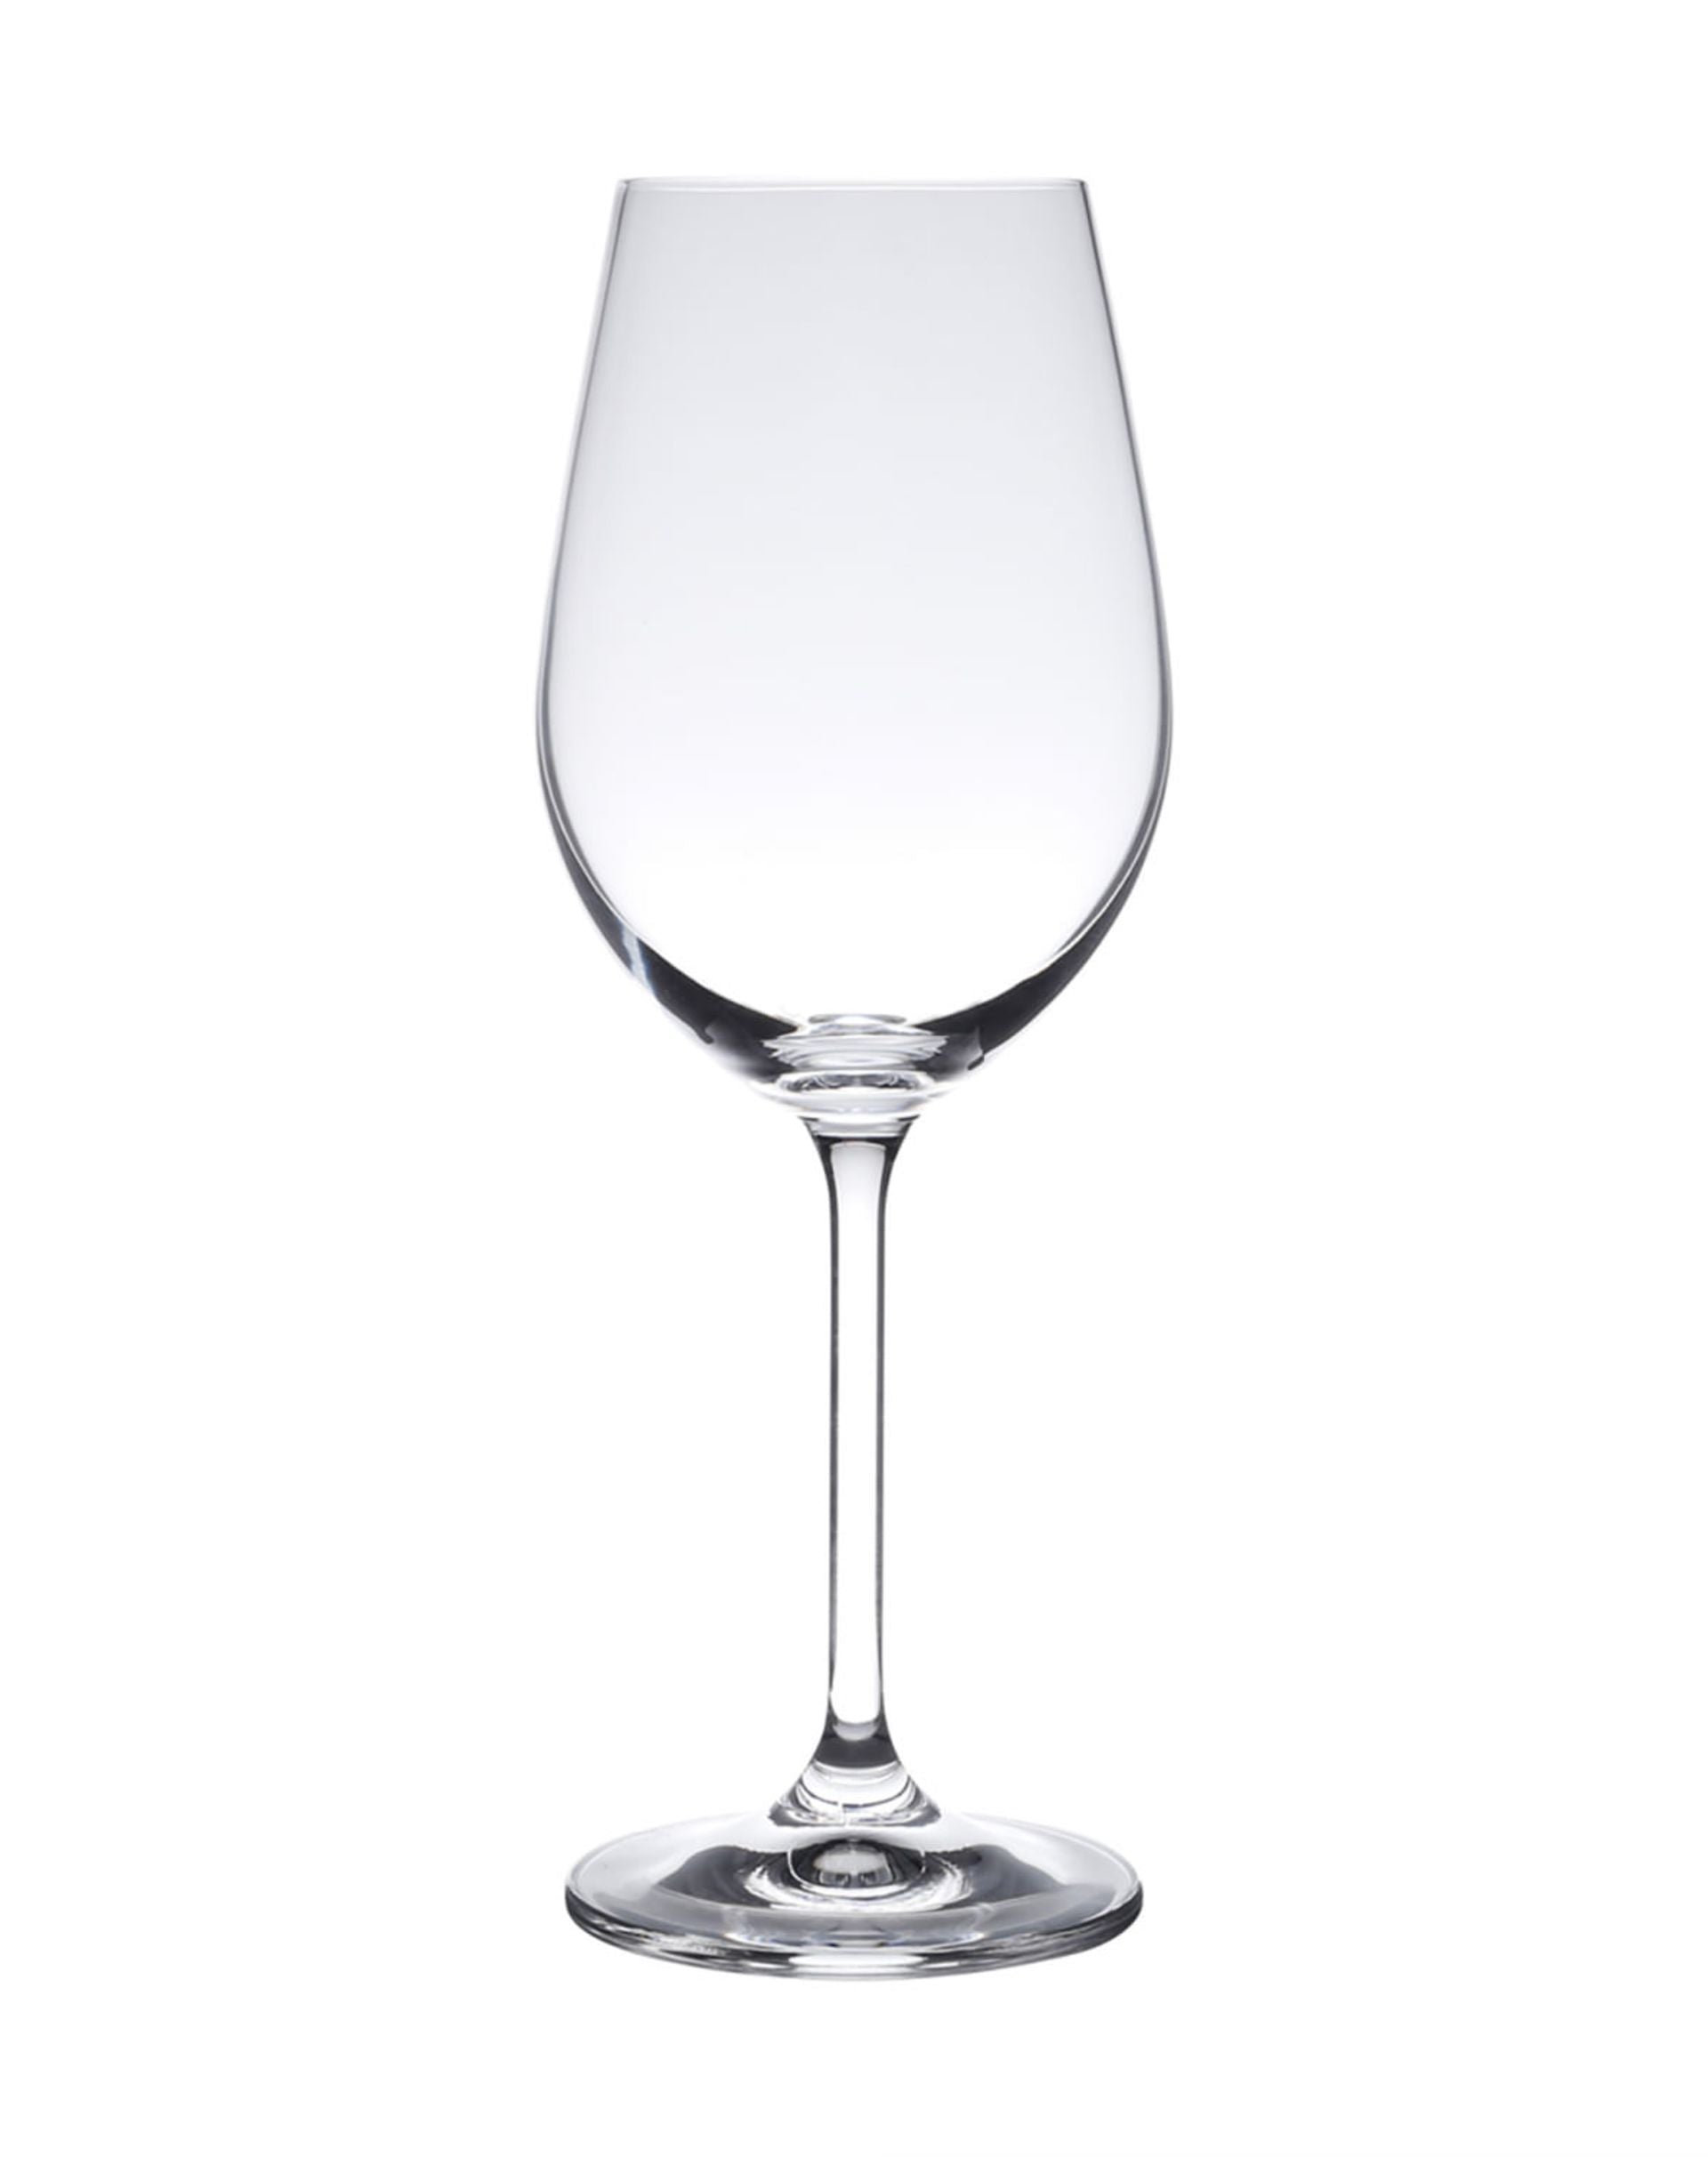 Conjunto 6 Taças de Vinho Branco de Cristal Ecológico Gastro/Colibri 350ml - Wolff - TRANSPARENTE